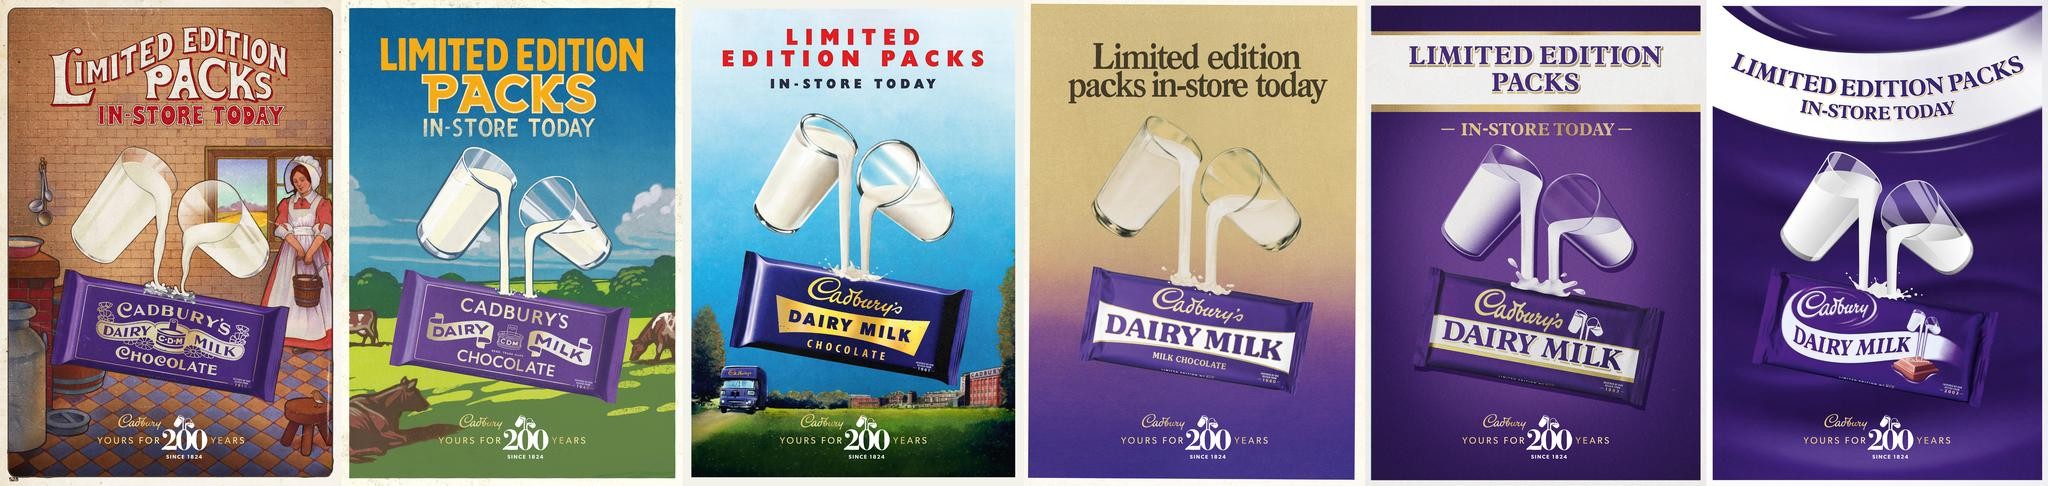 Cadbury 200 Years | Limited Edition Packs